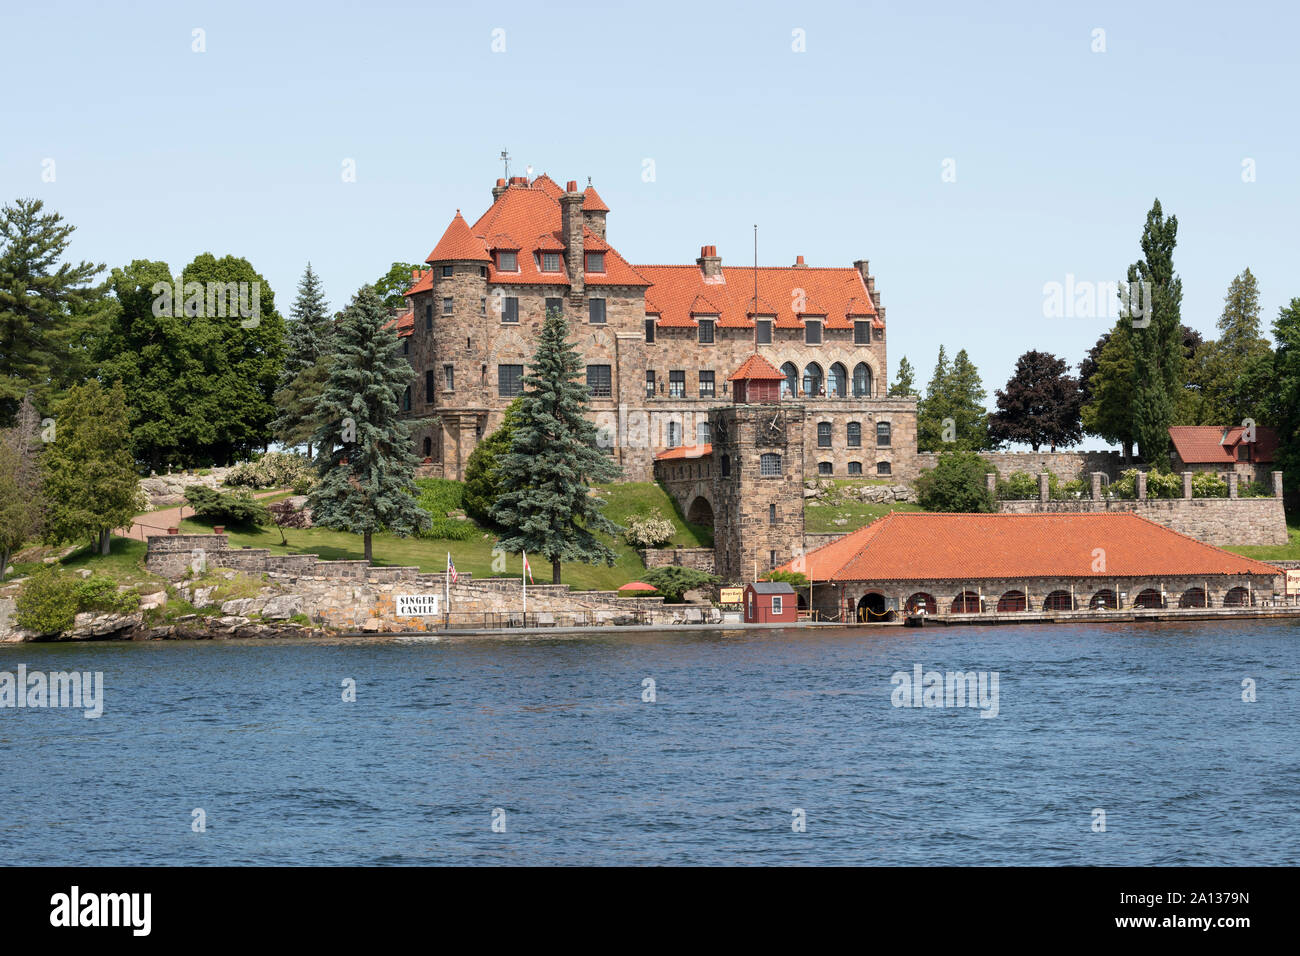 Singer Castle, Dark Island, St. Lawrence River, tausend Inseln, New York Stockfoto